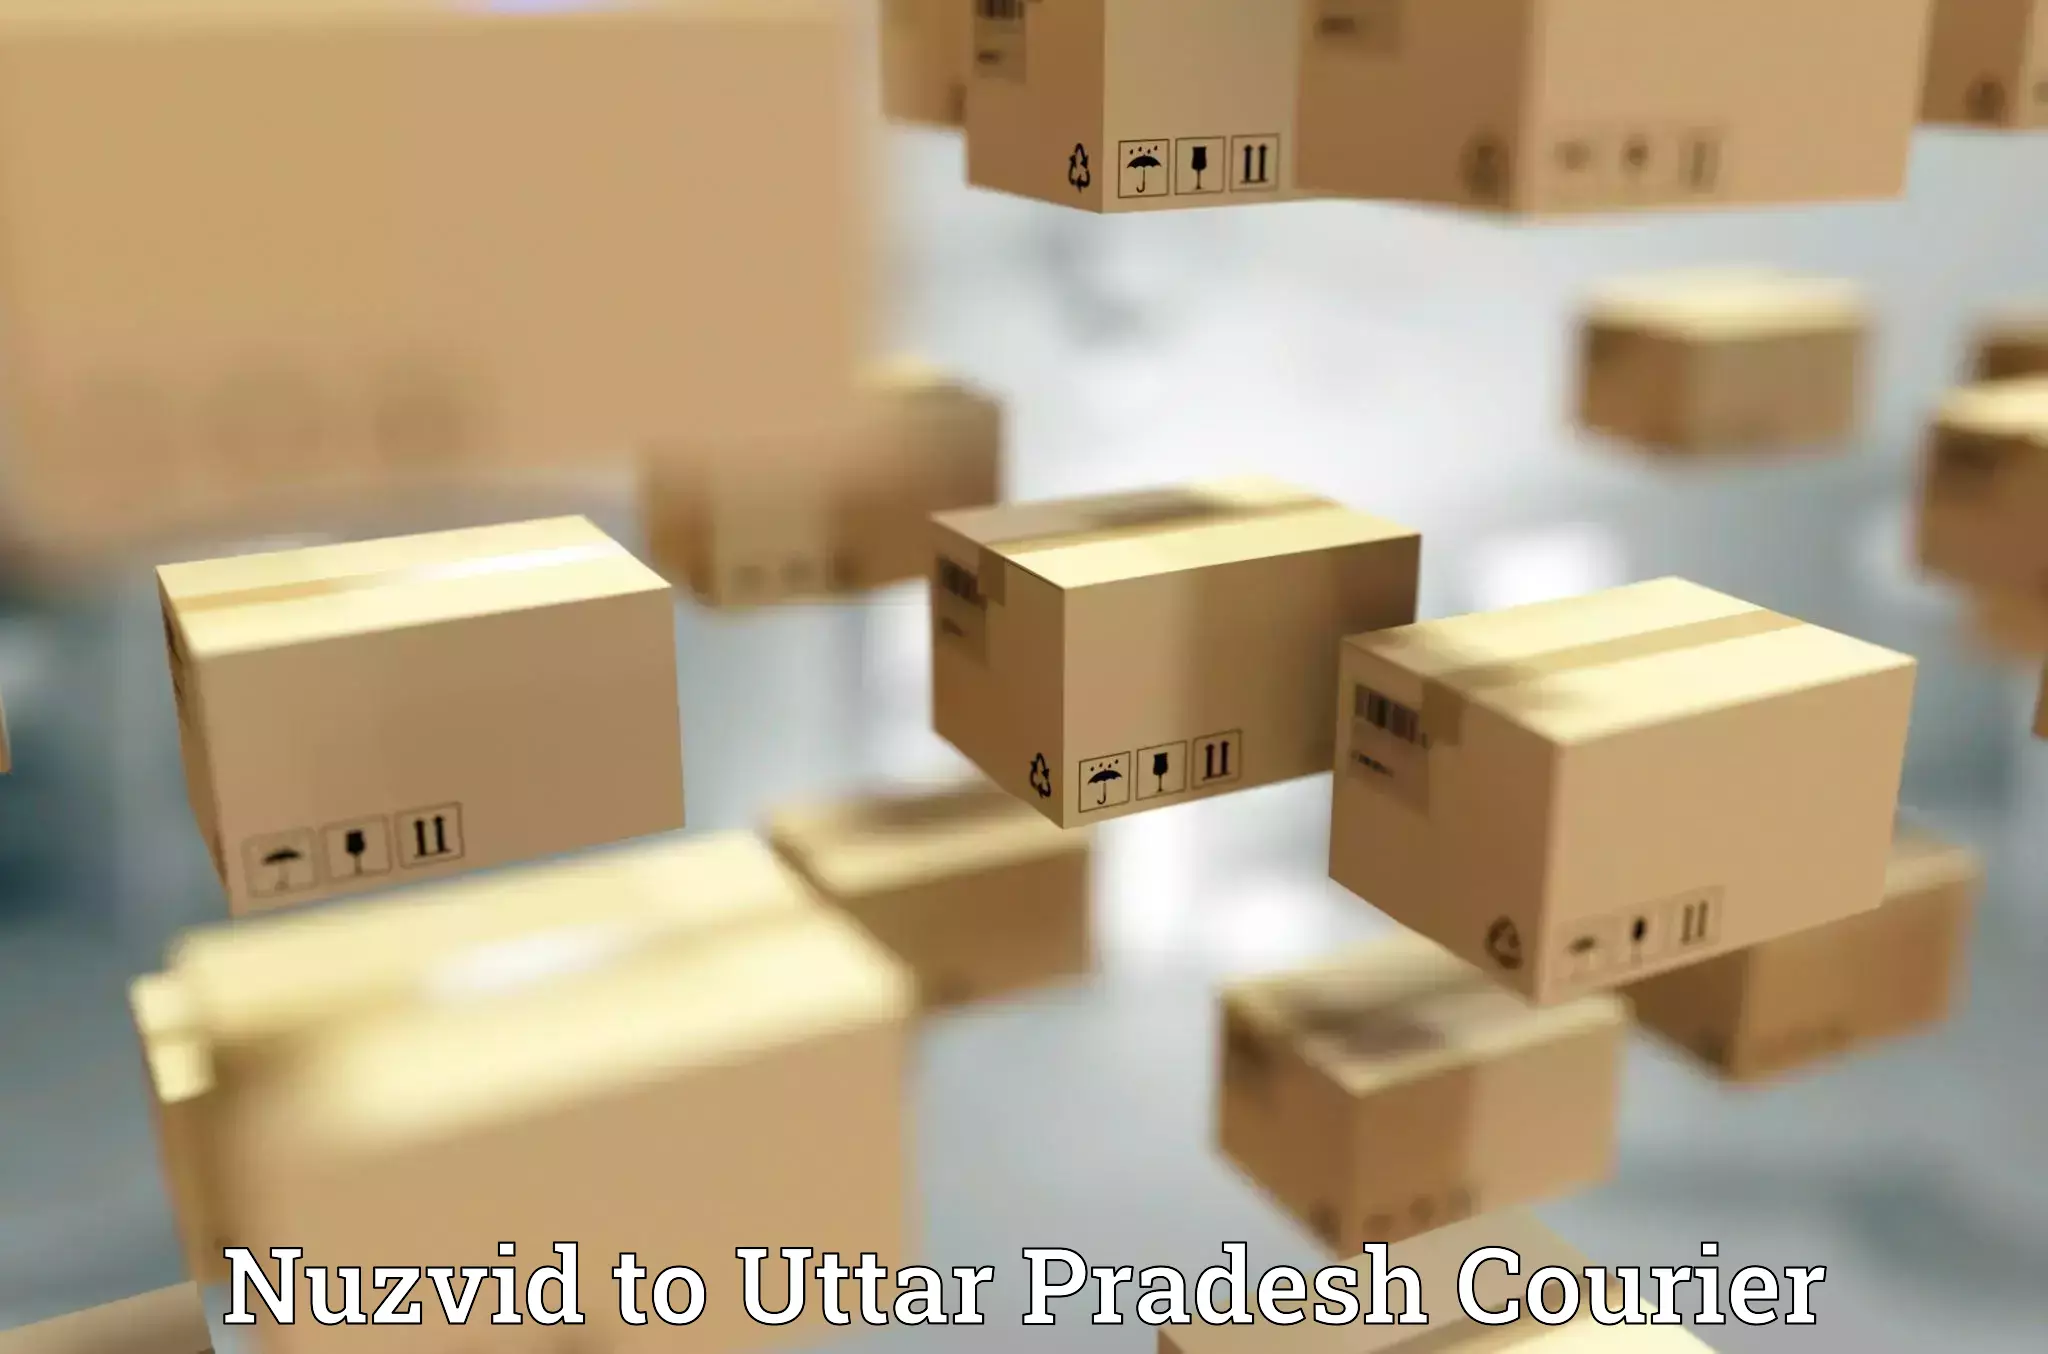 On-demand delivery Nuzvid to Noida